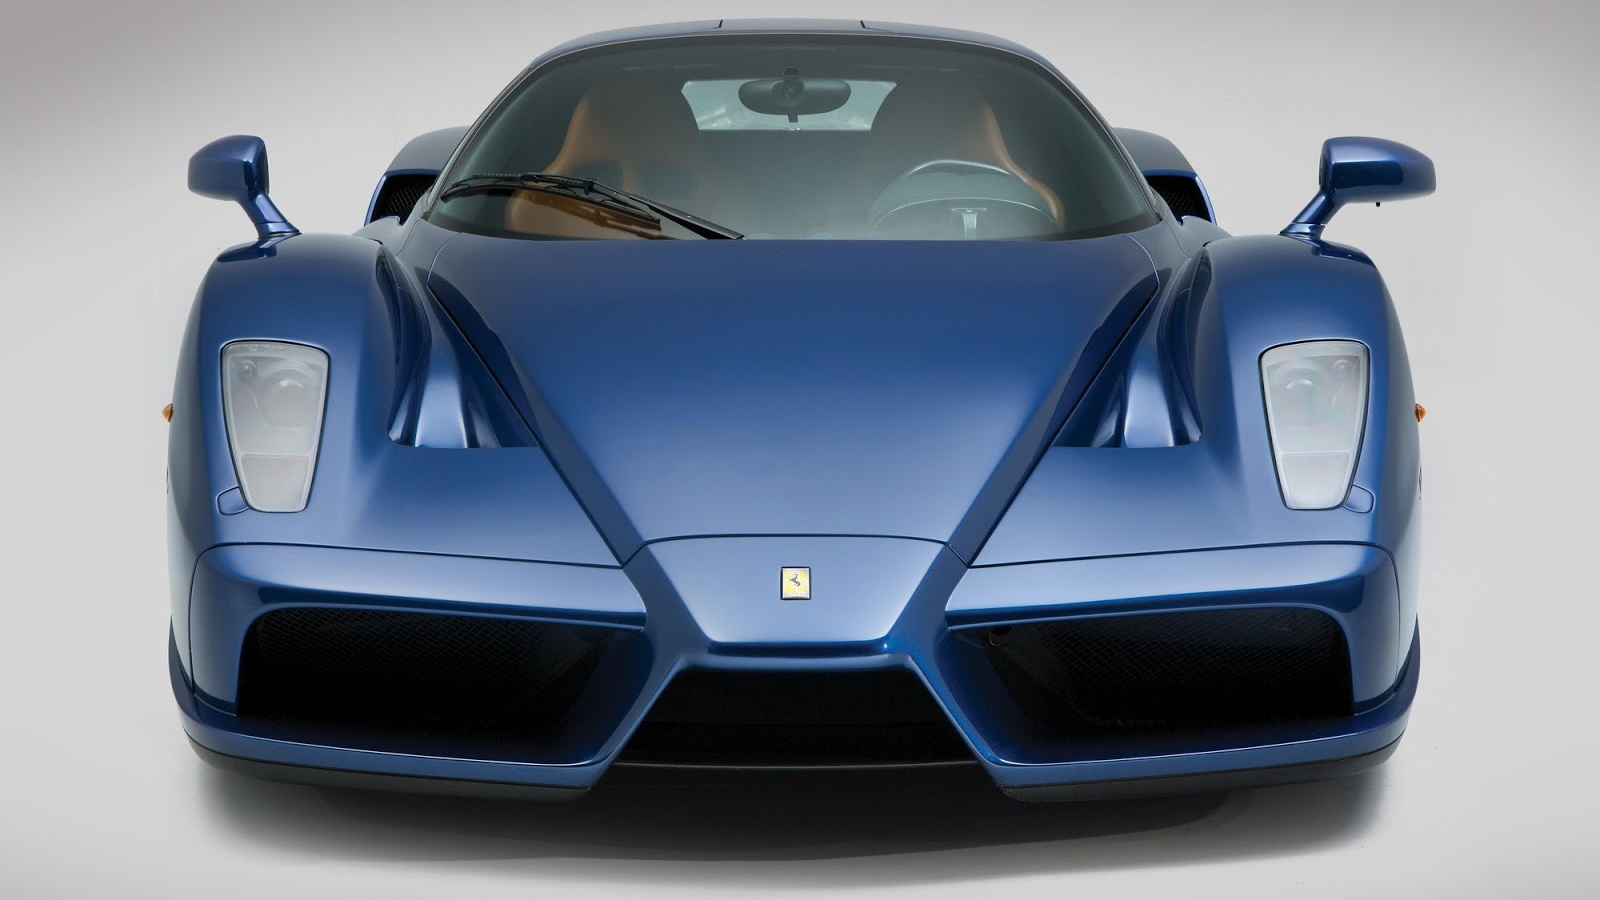 Rare blue Ferrari Enzo heading to auction in London.